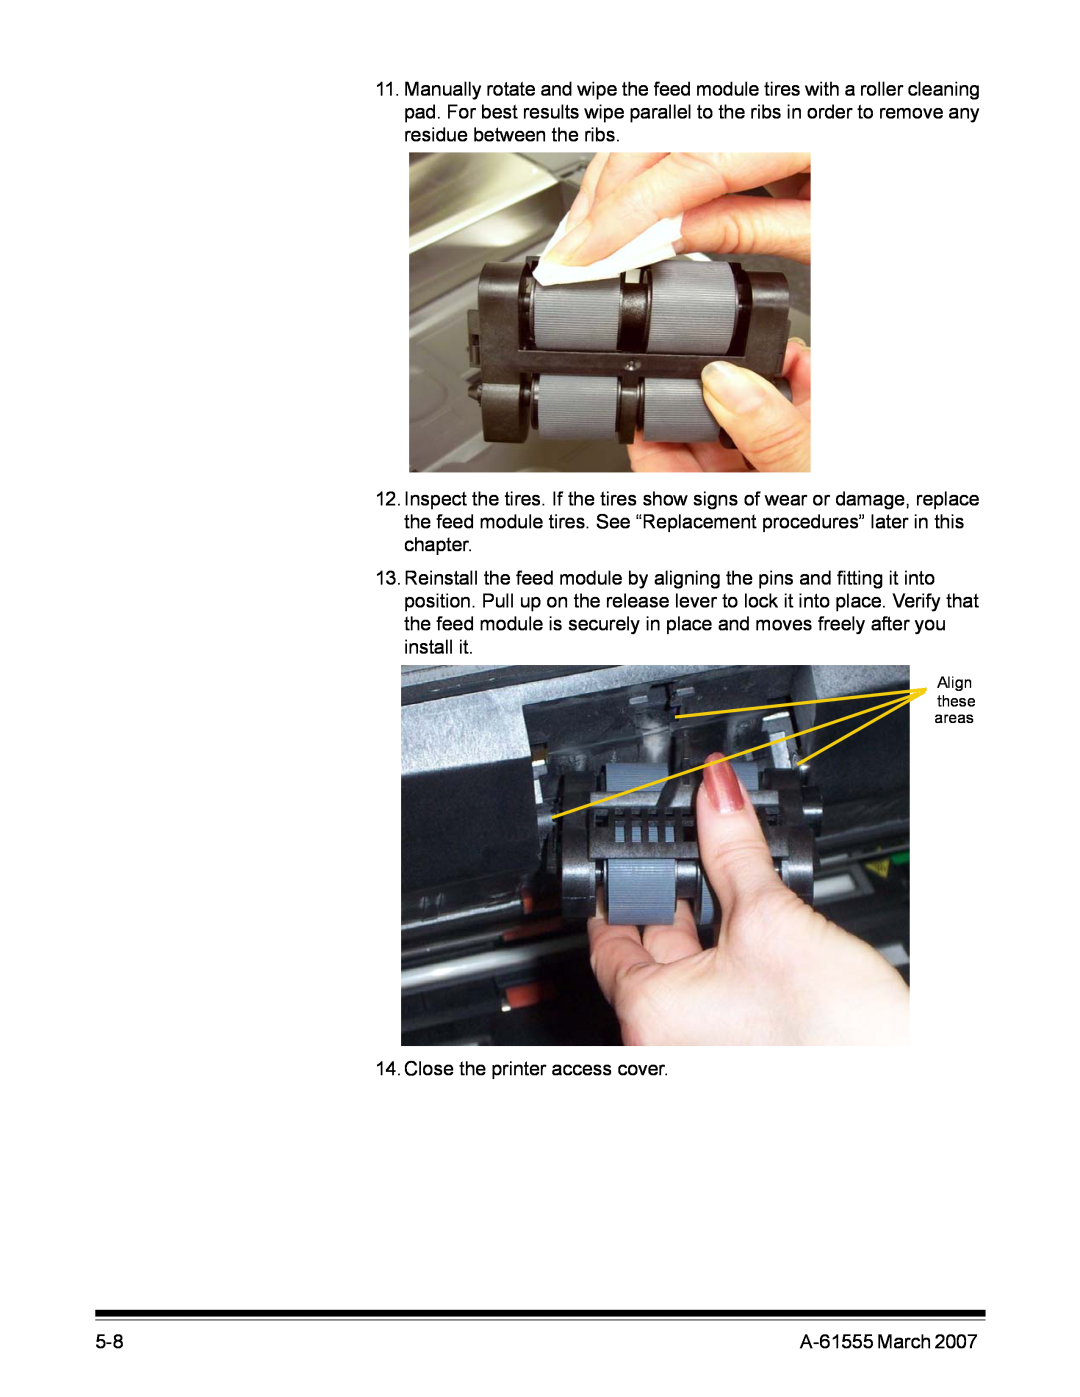 Kodak i1800 Series manual Close the printer access cover 